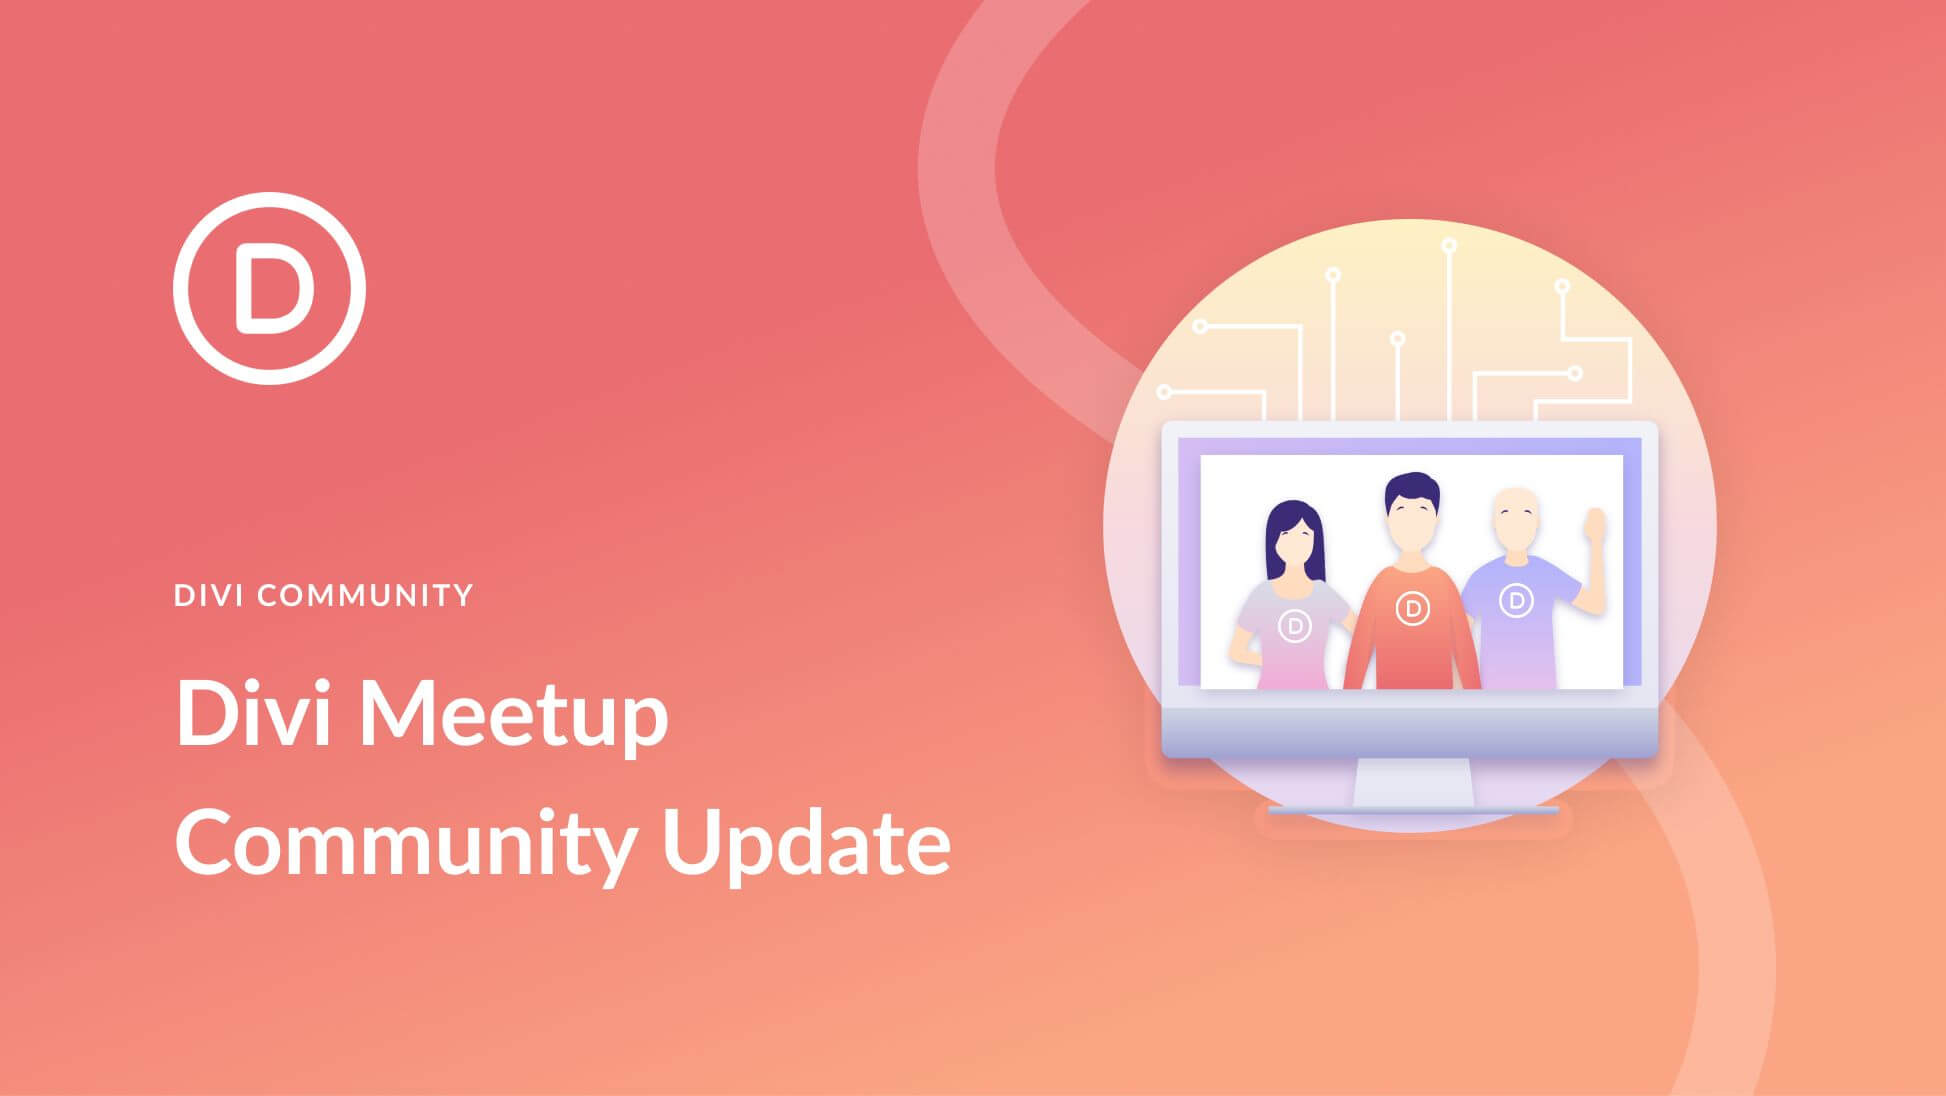 Divi Meetup Community Update: Q1 2023